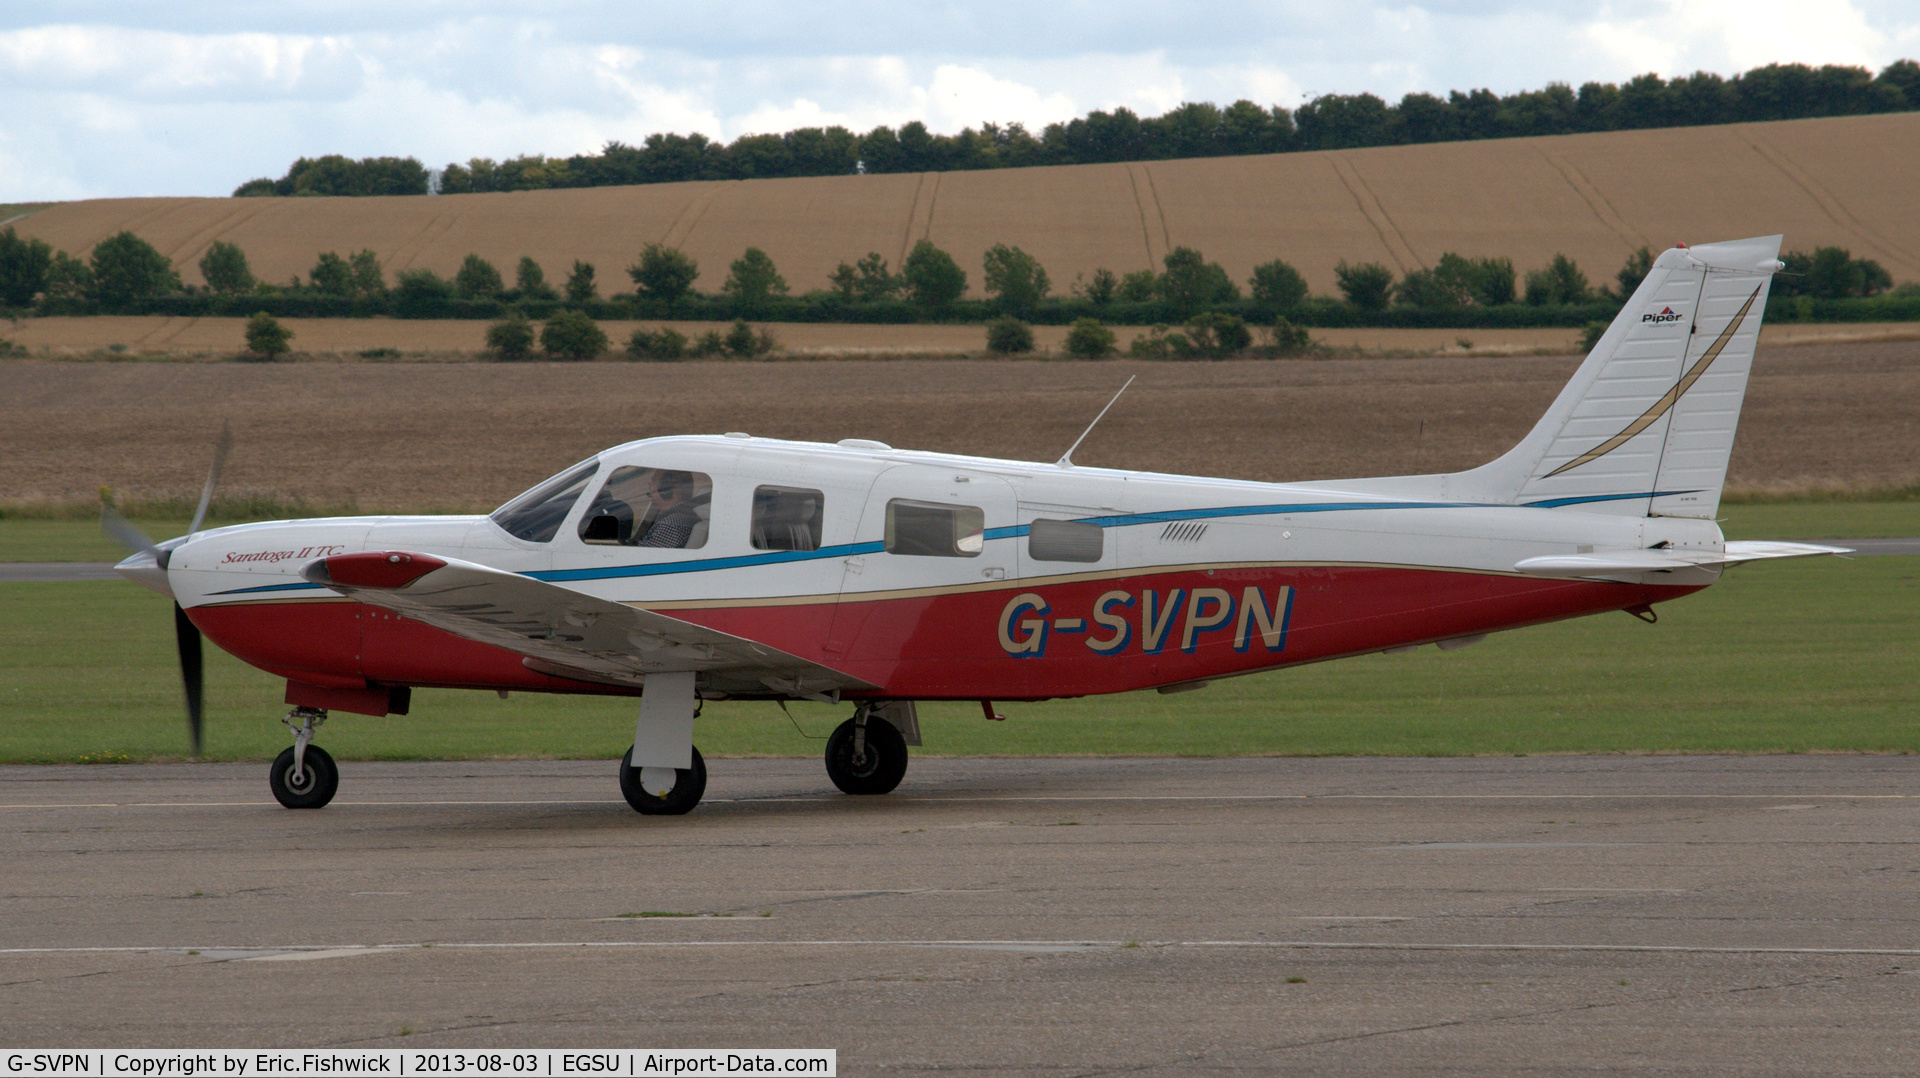 G-SVPN, 2003 Piper PA-32R-301T Turbo Saratoga C/N 3257310, 1. G-SVPN preparing to depart Duxford Airfield.